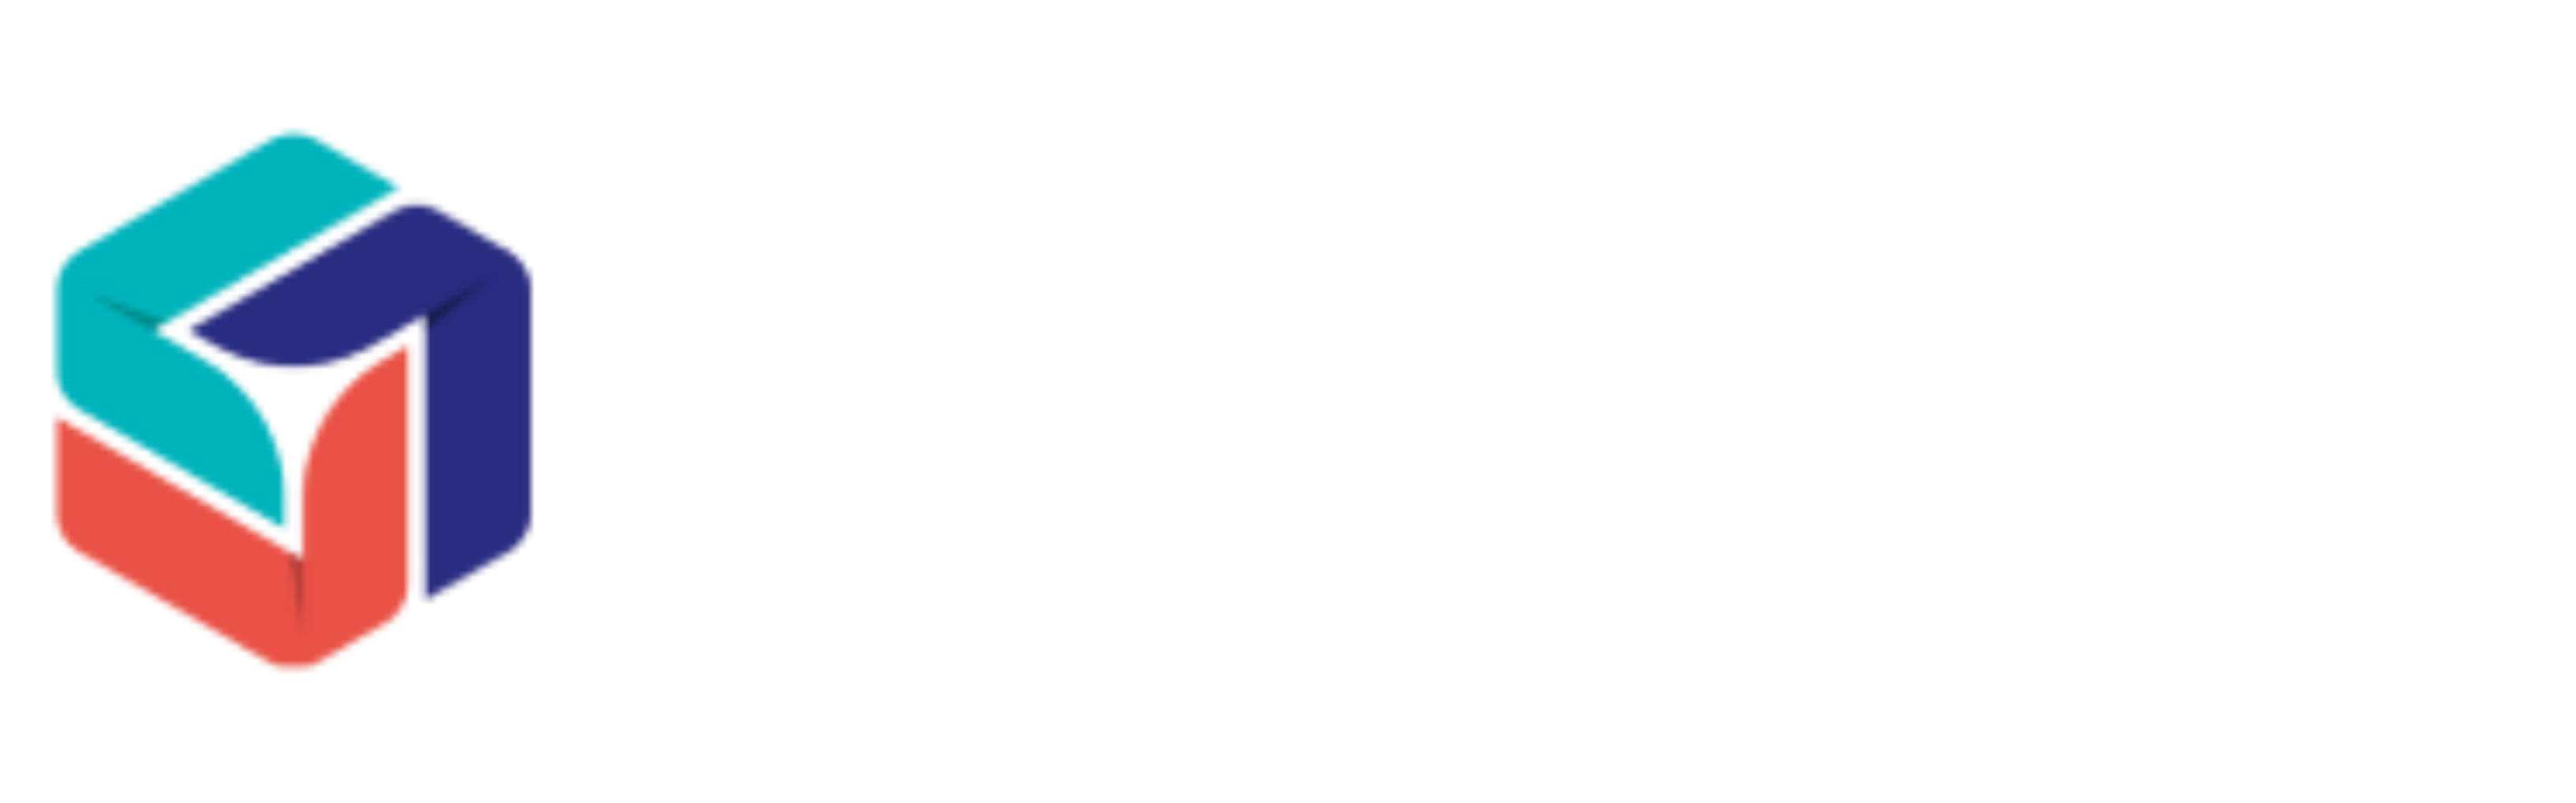 Universalxmglobalbroker